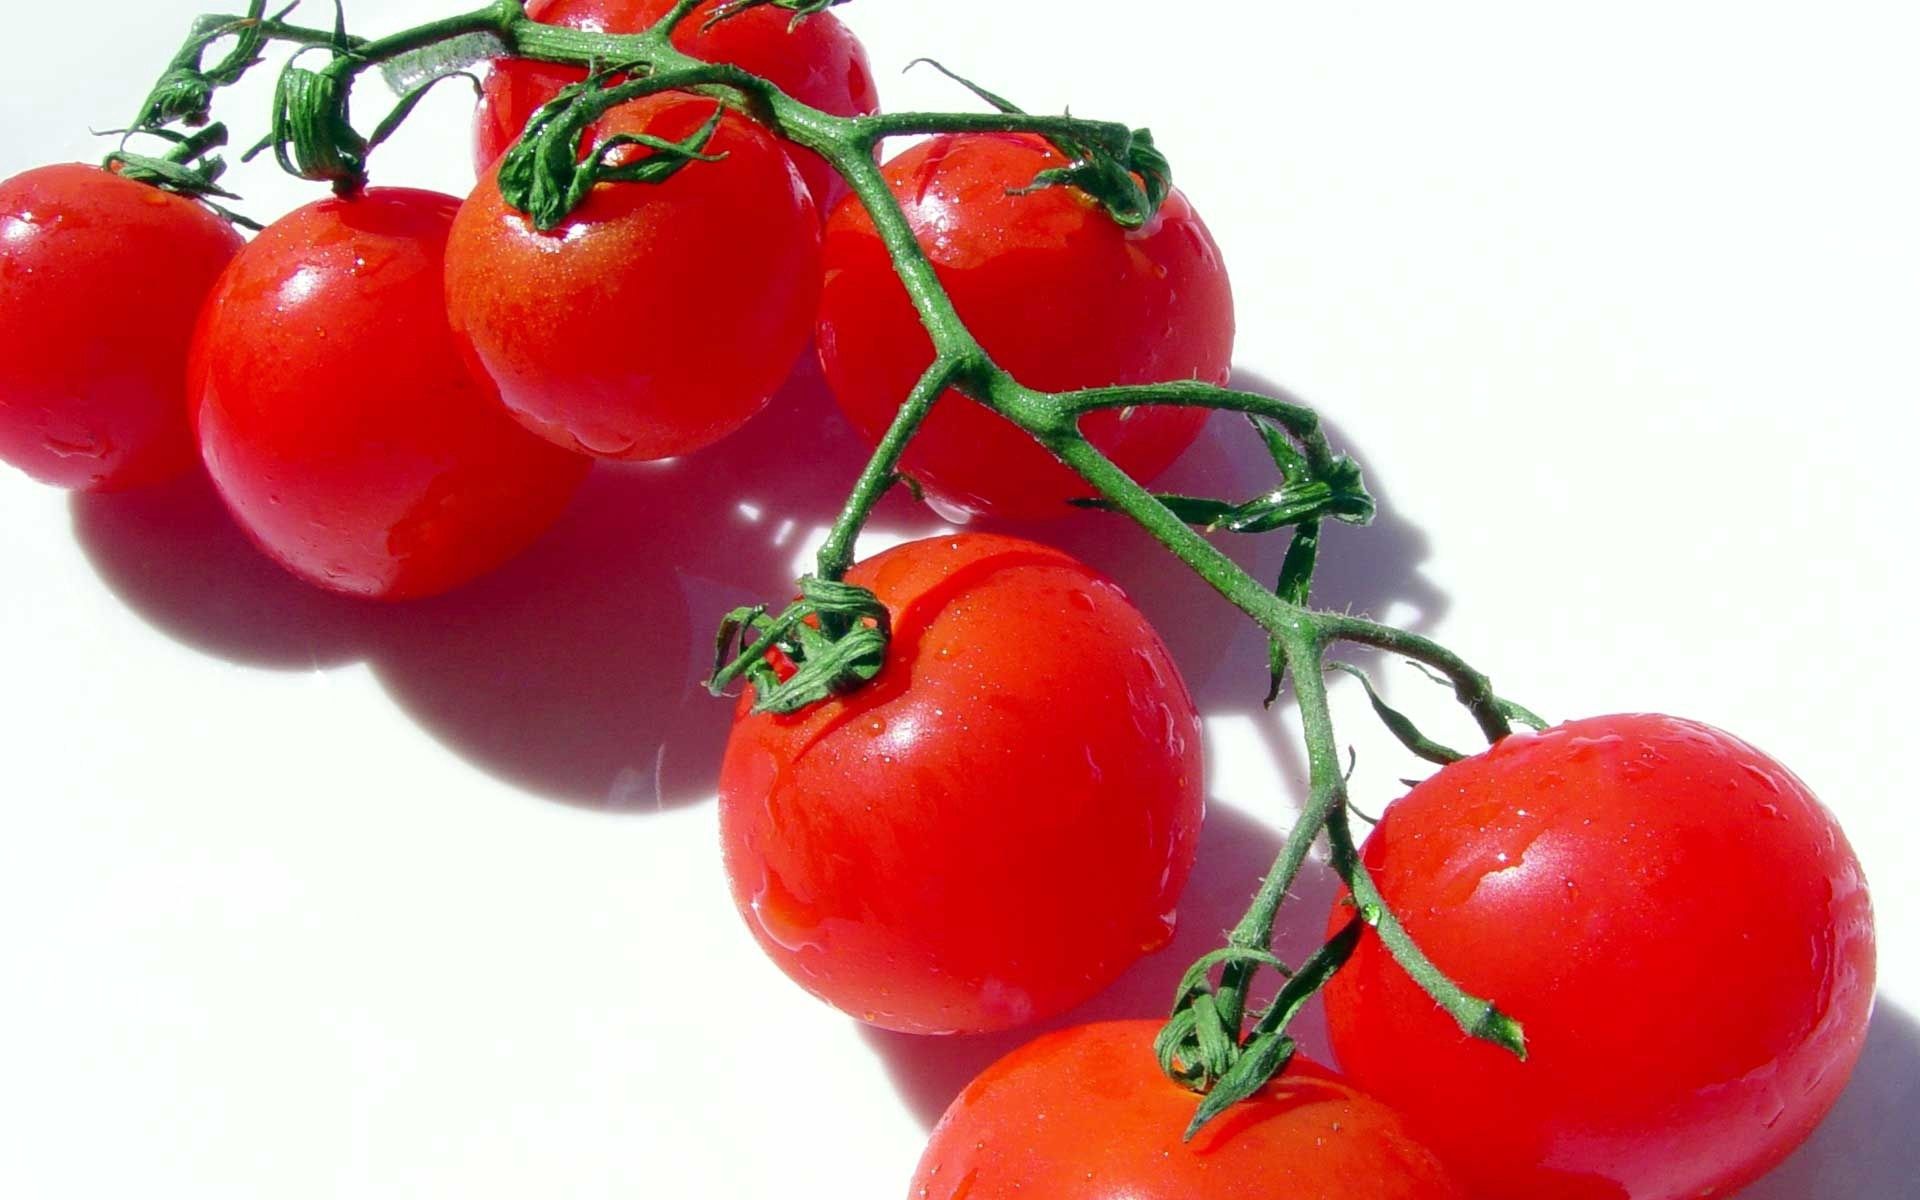 90361 descargar imagen comida, rama, tomate, vegetal, verdura, un tomate: fondos de pantalla y protectores de pantalla gratis